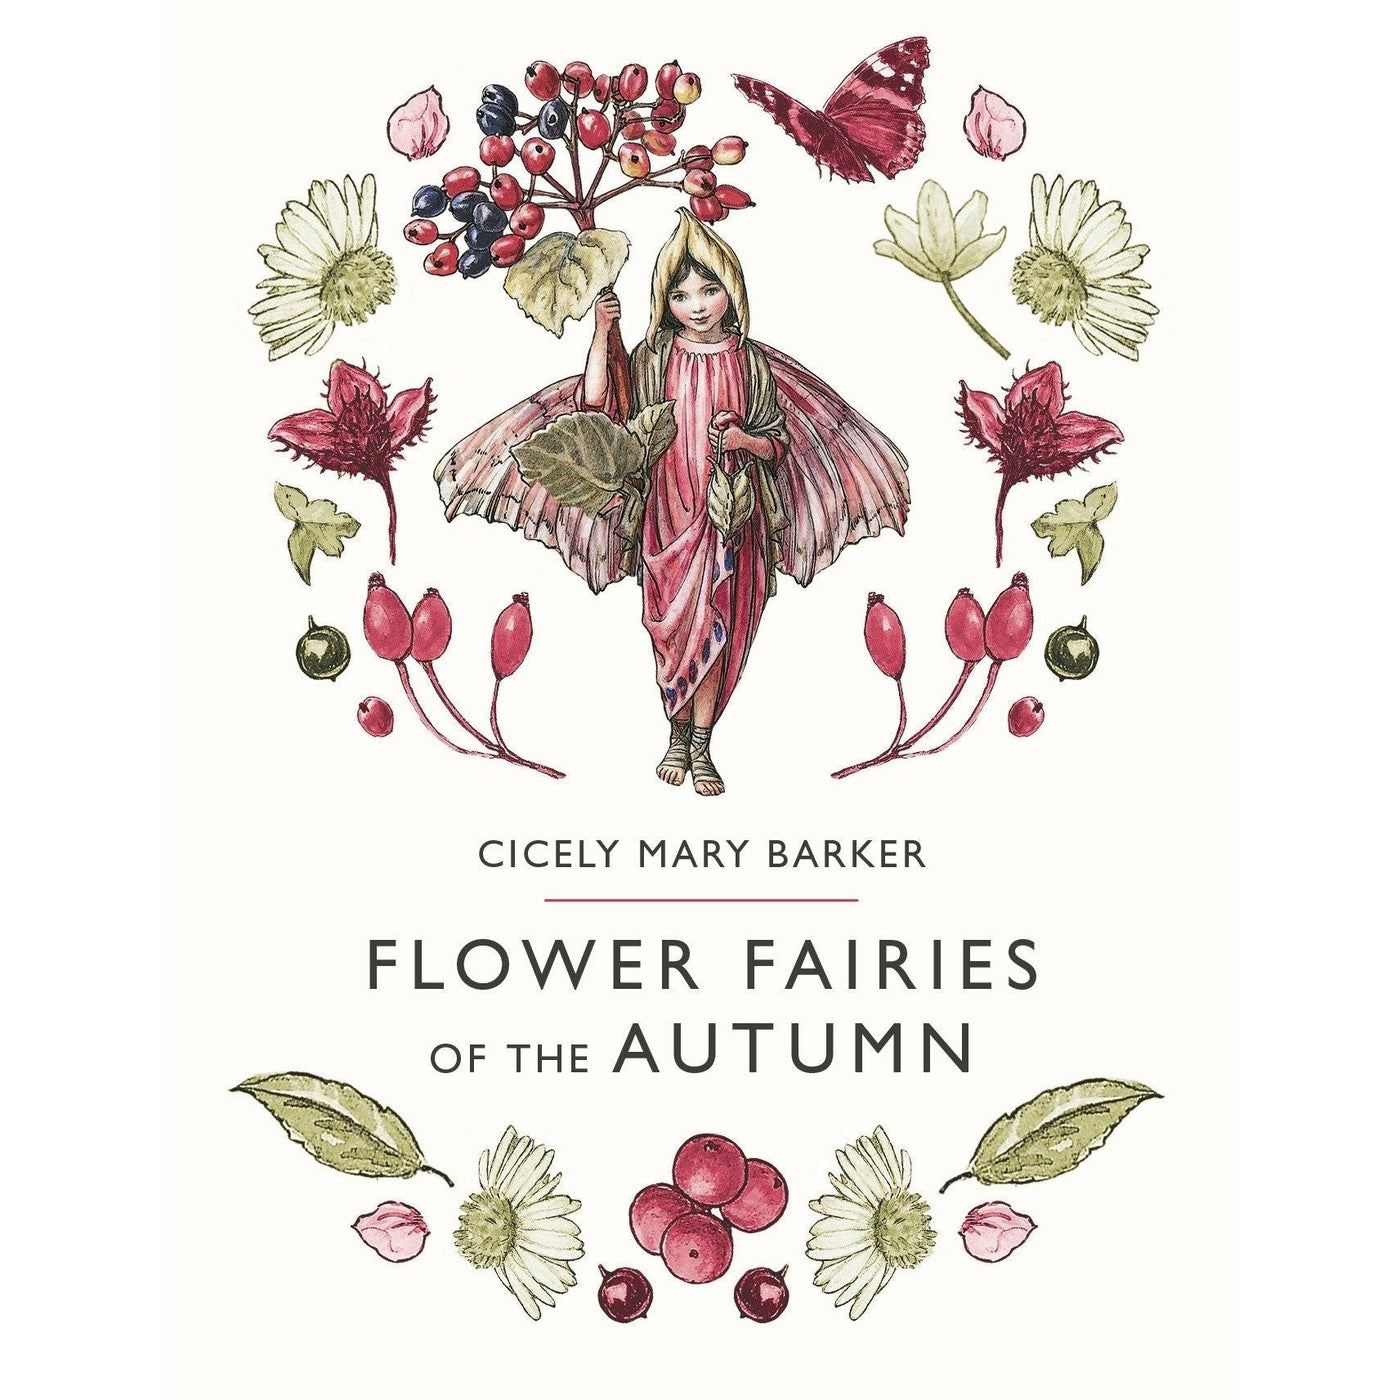 Flower Fairies of the Autumn